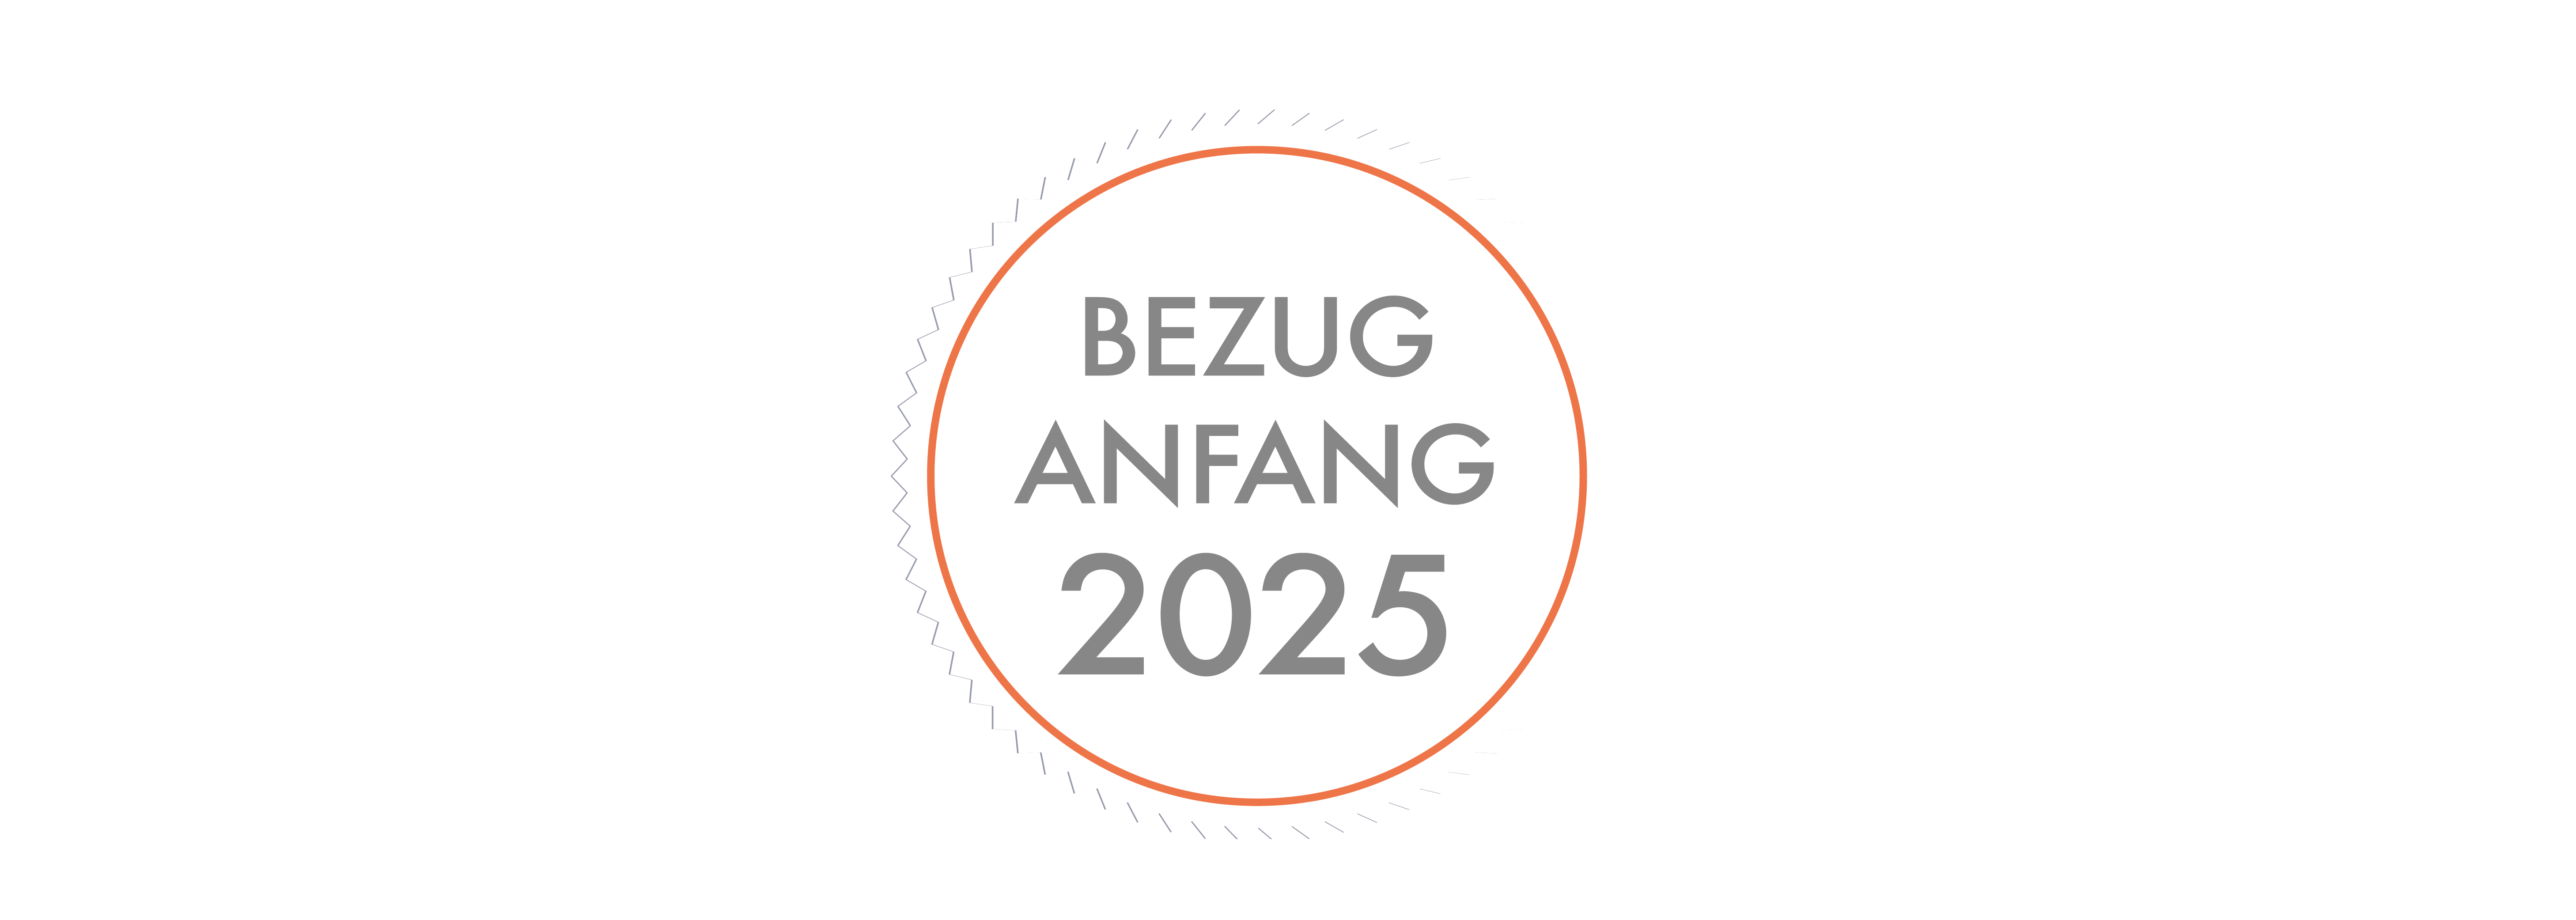 bezug_anfang-2025.png